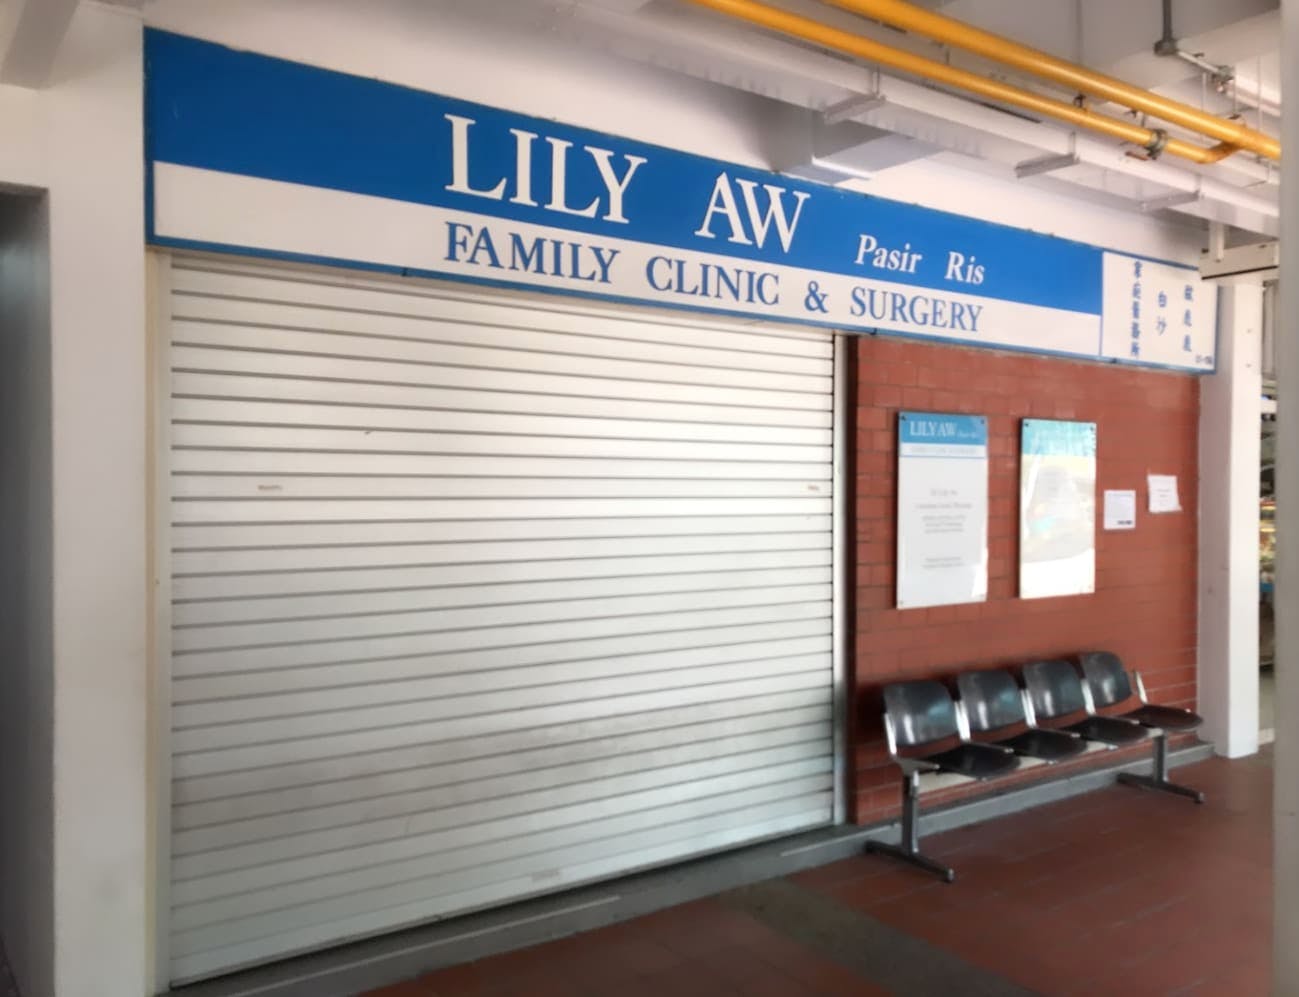 Lily Aw Pasir Ris Family Clinic & Surgery